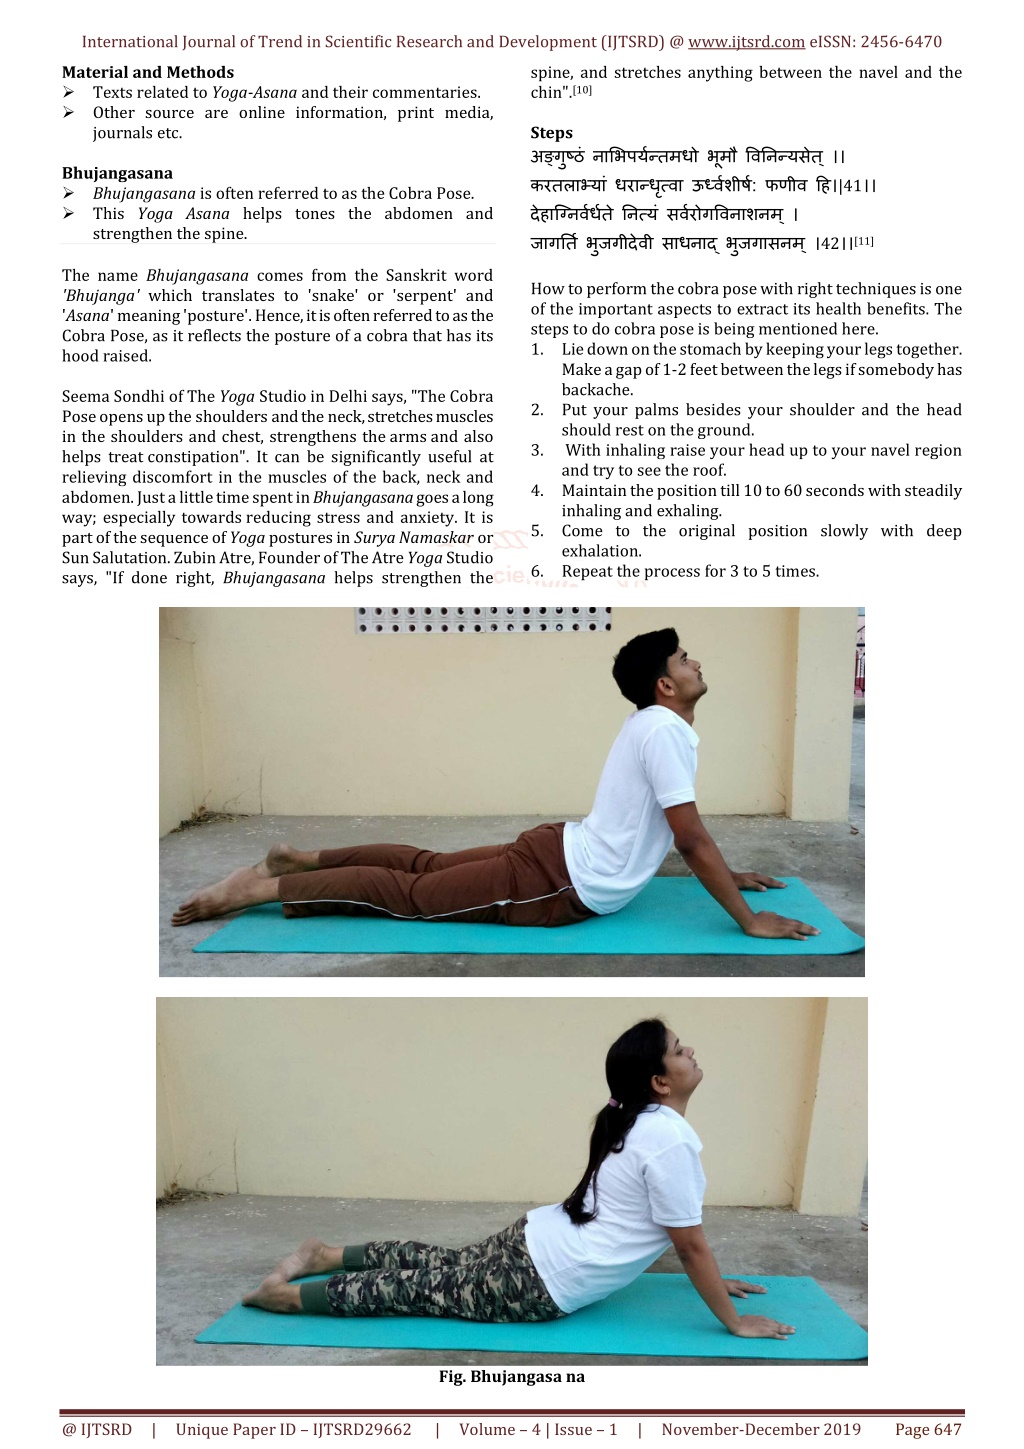 bhujangasana | Cobra Pose| Steps, Benefits, Precautions